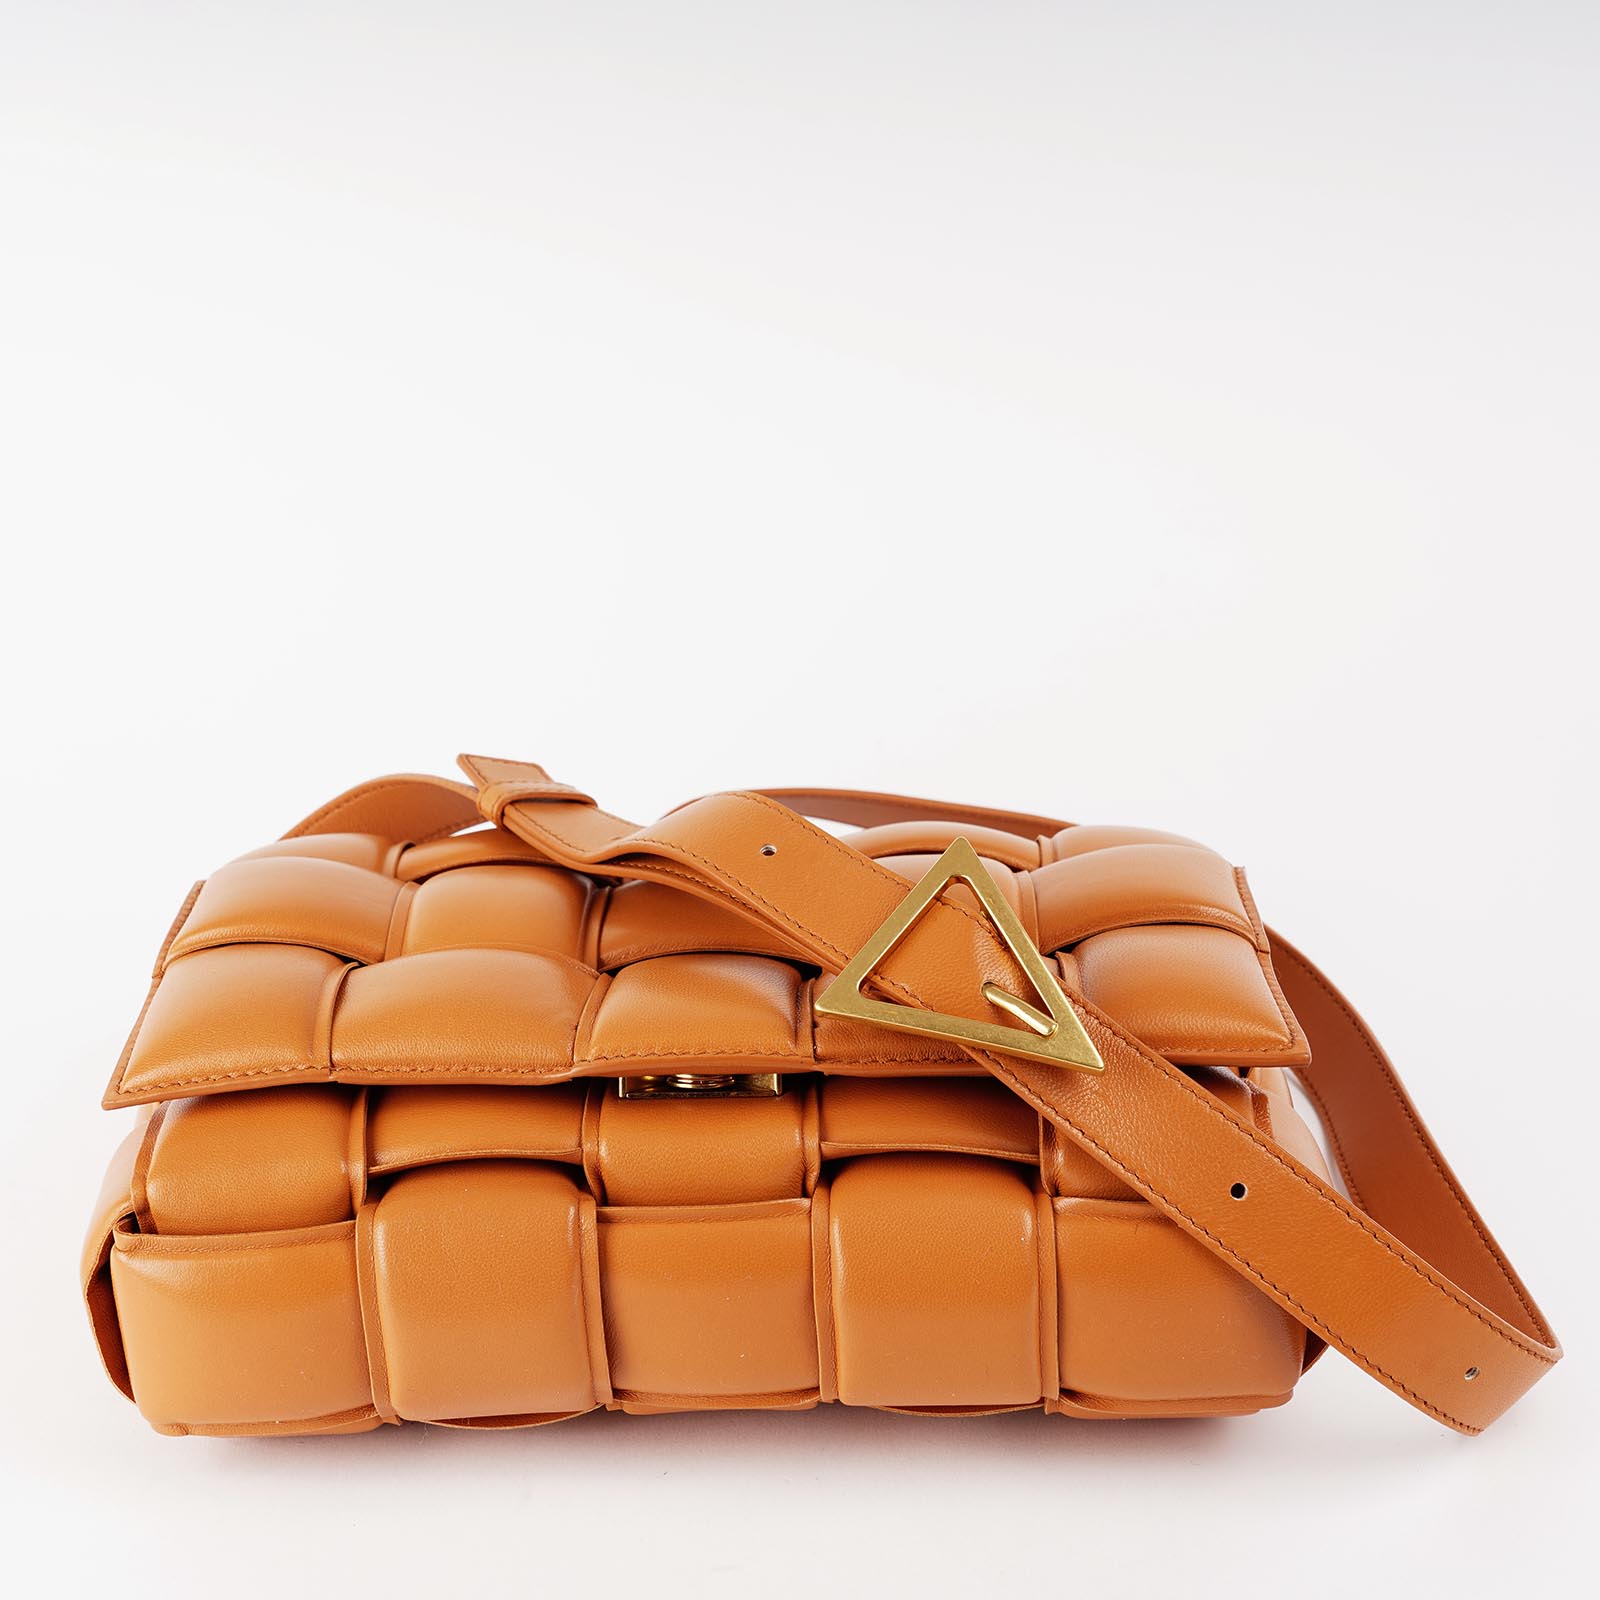 Padded Cassette Bag - BOTTEGA - Affordable Luxury image